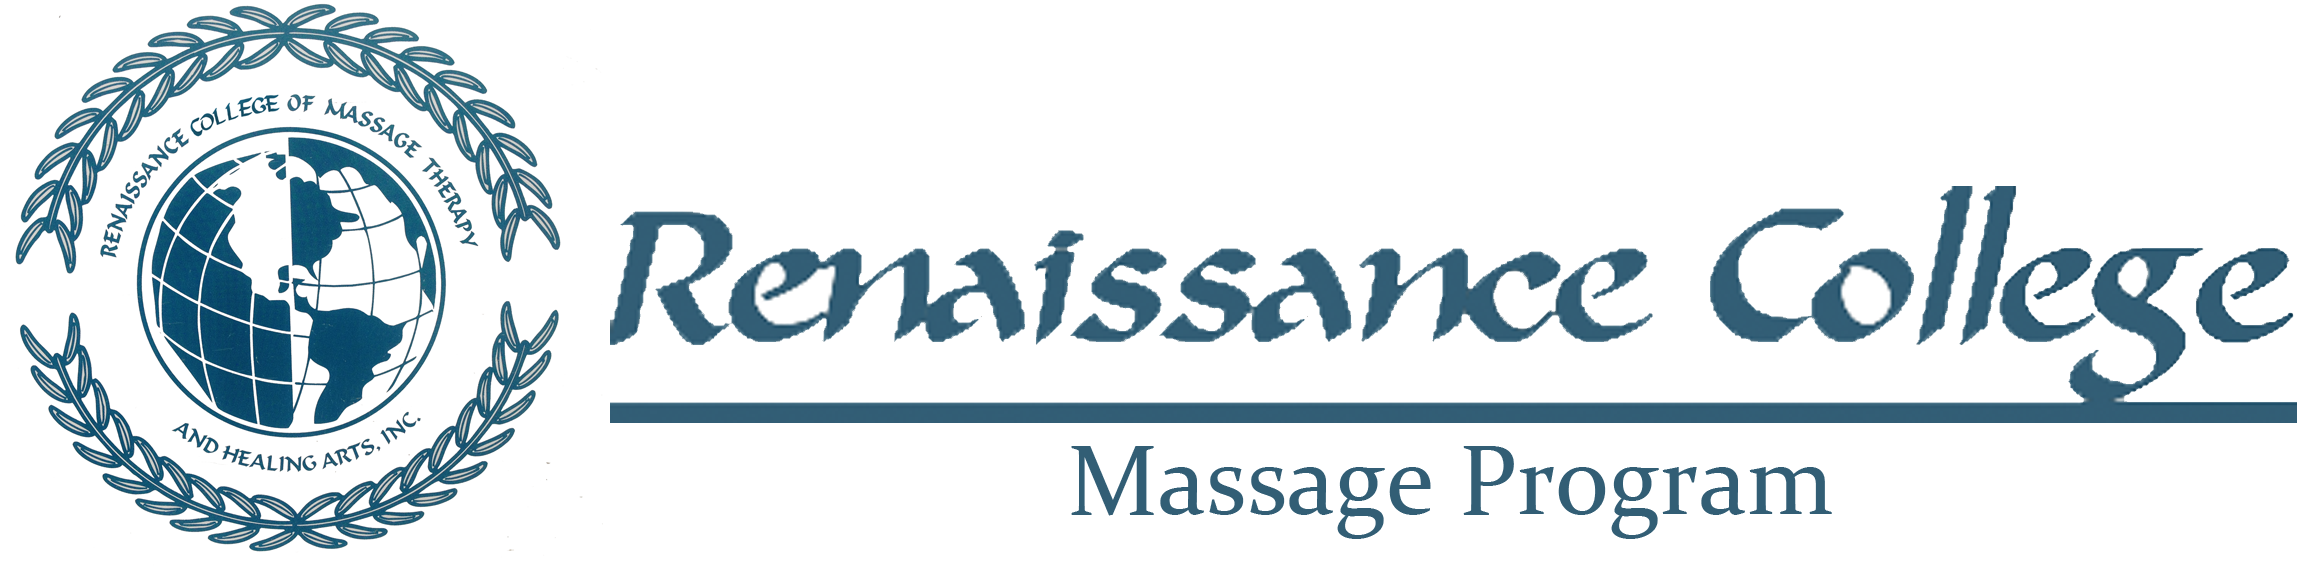 Renaissance Banner2 Renaissance College Massage Program 0601